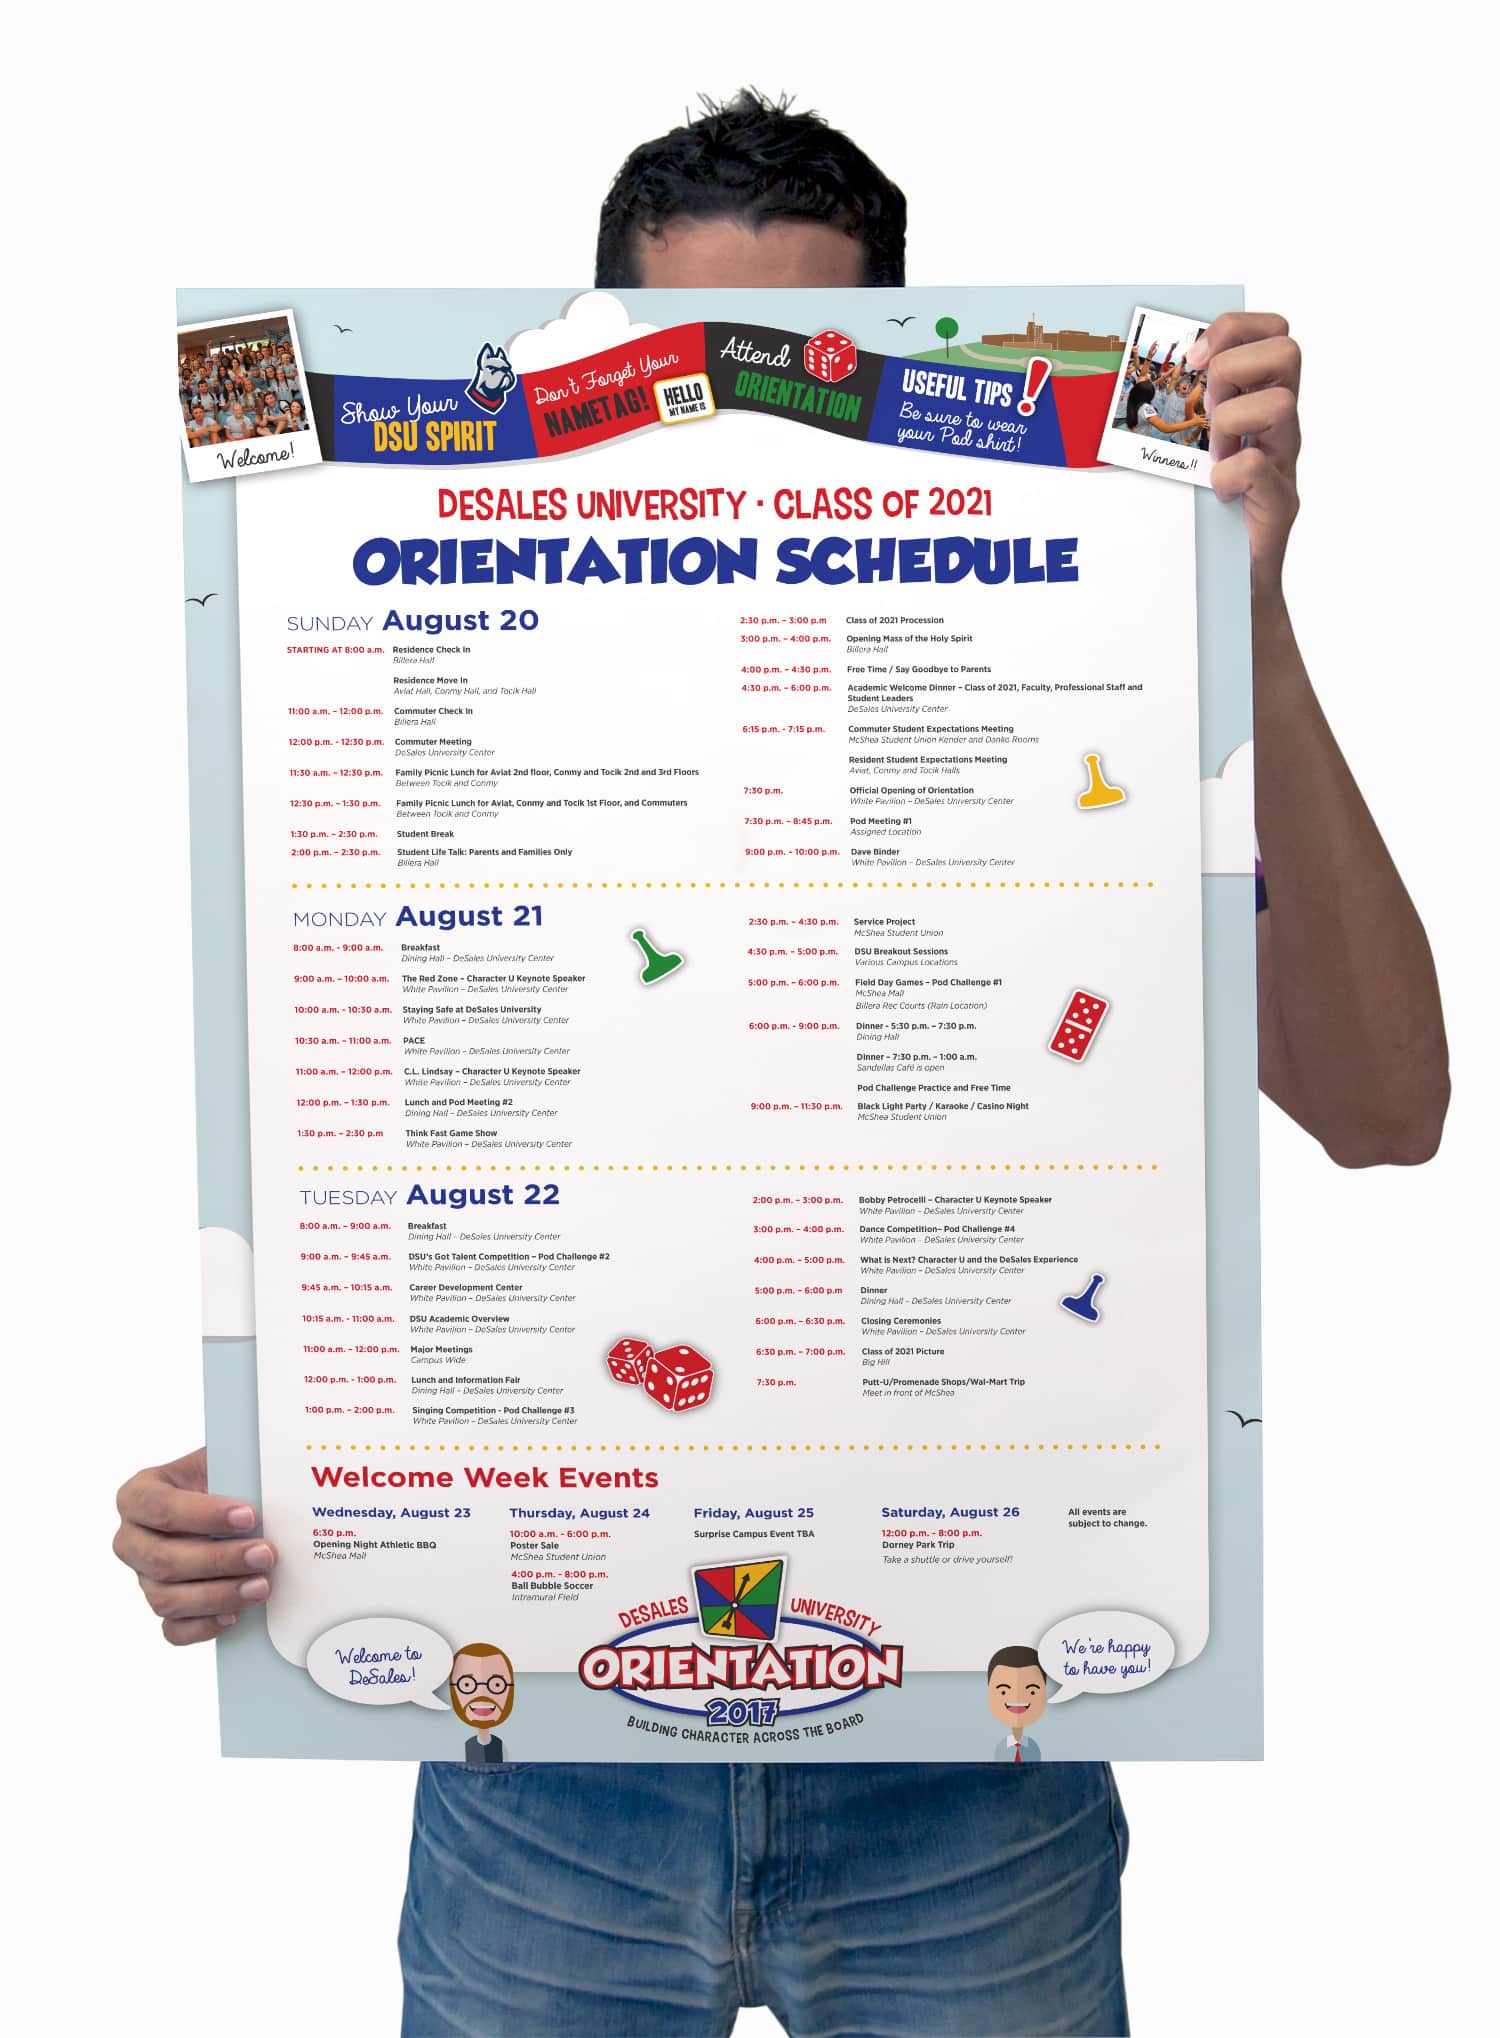 DeSales University Orientation Schedule Poster